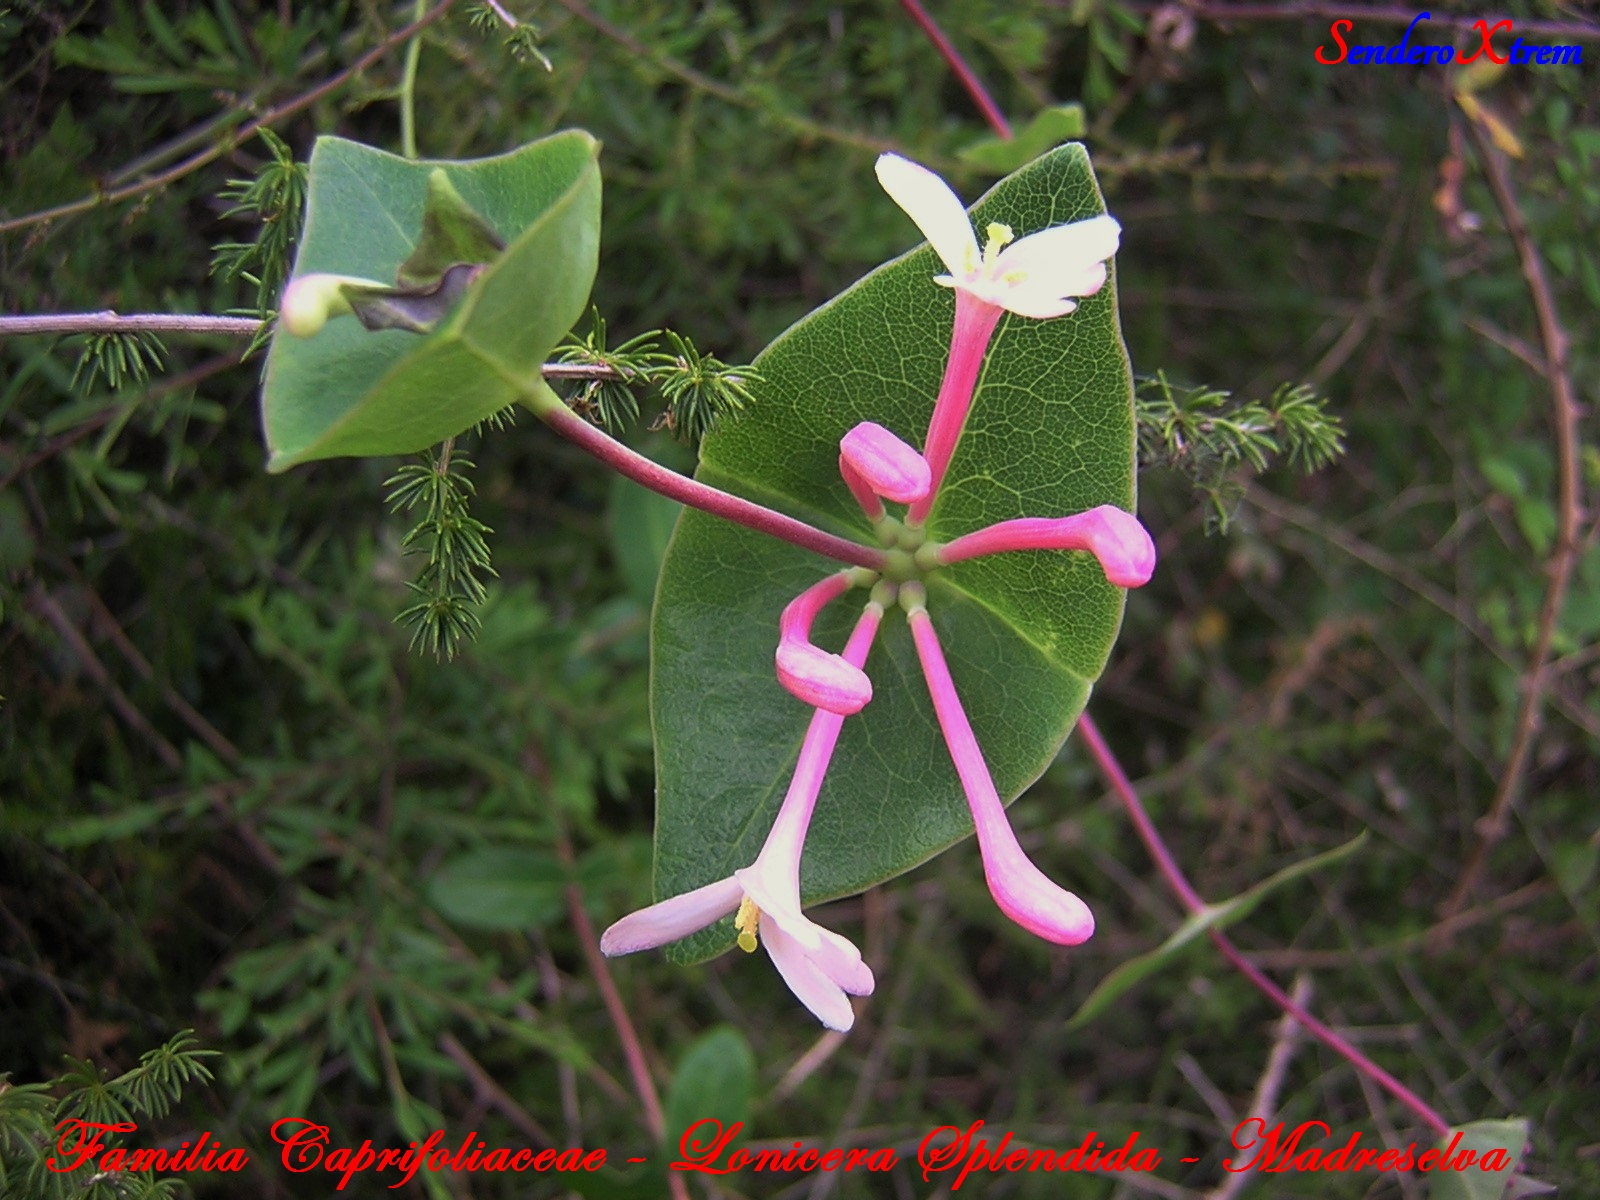 Familia Caprifoliaceae - Lonicera Splendida - Madreselva